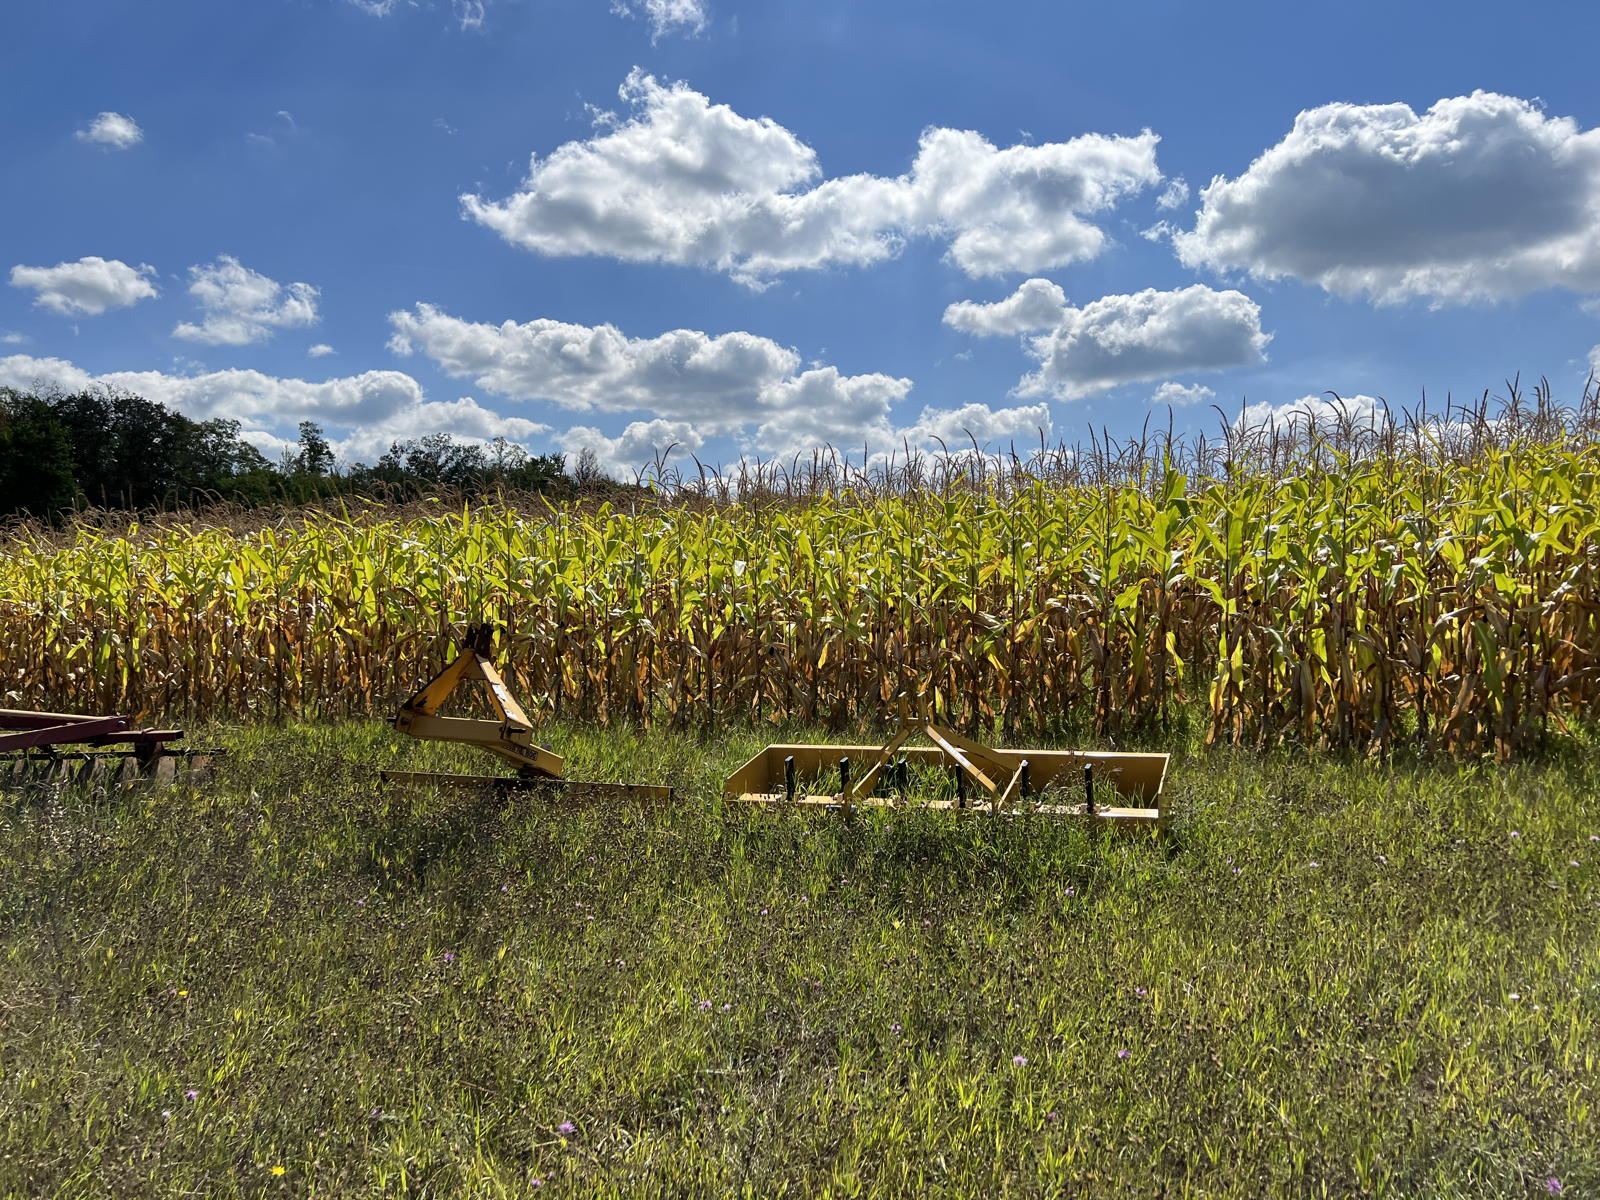 Cornfield afternoon: Michigan cornfield in the sun.; Michigan; corn; farming; agriculture